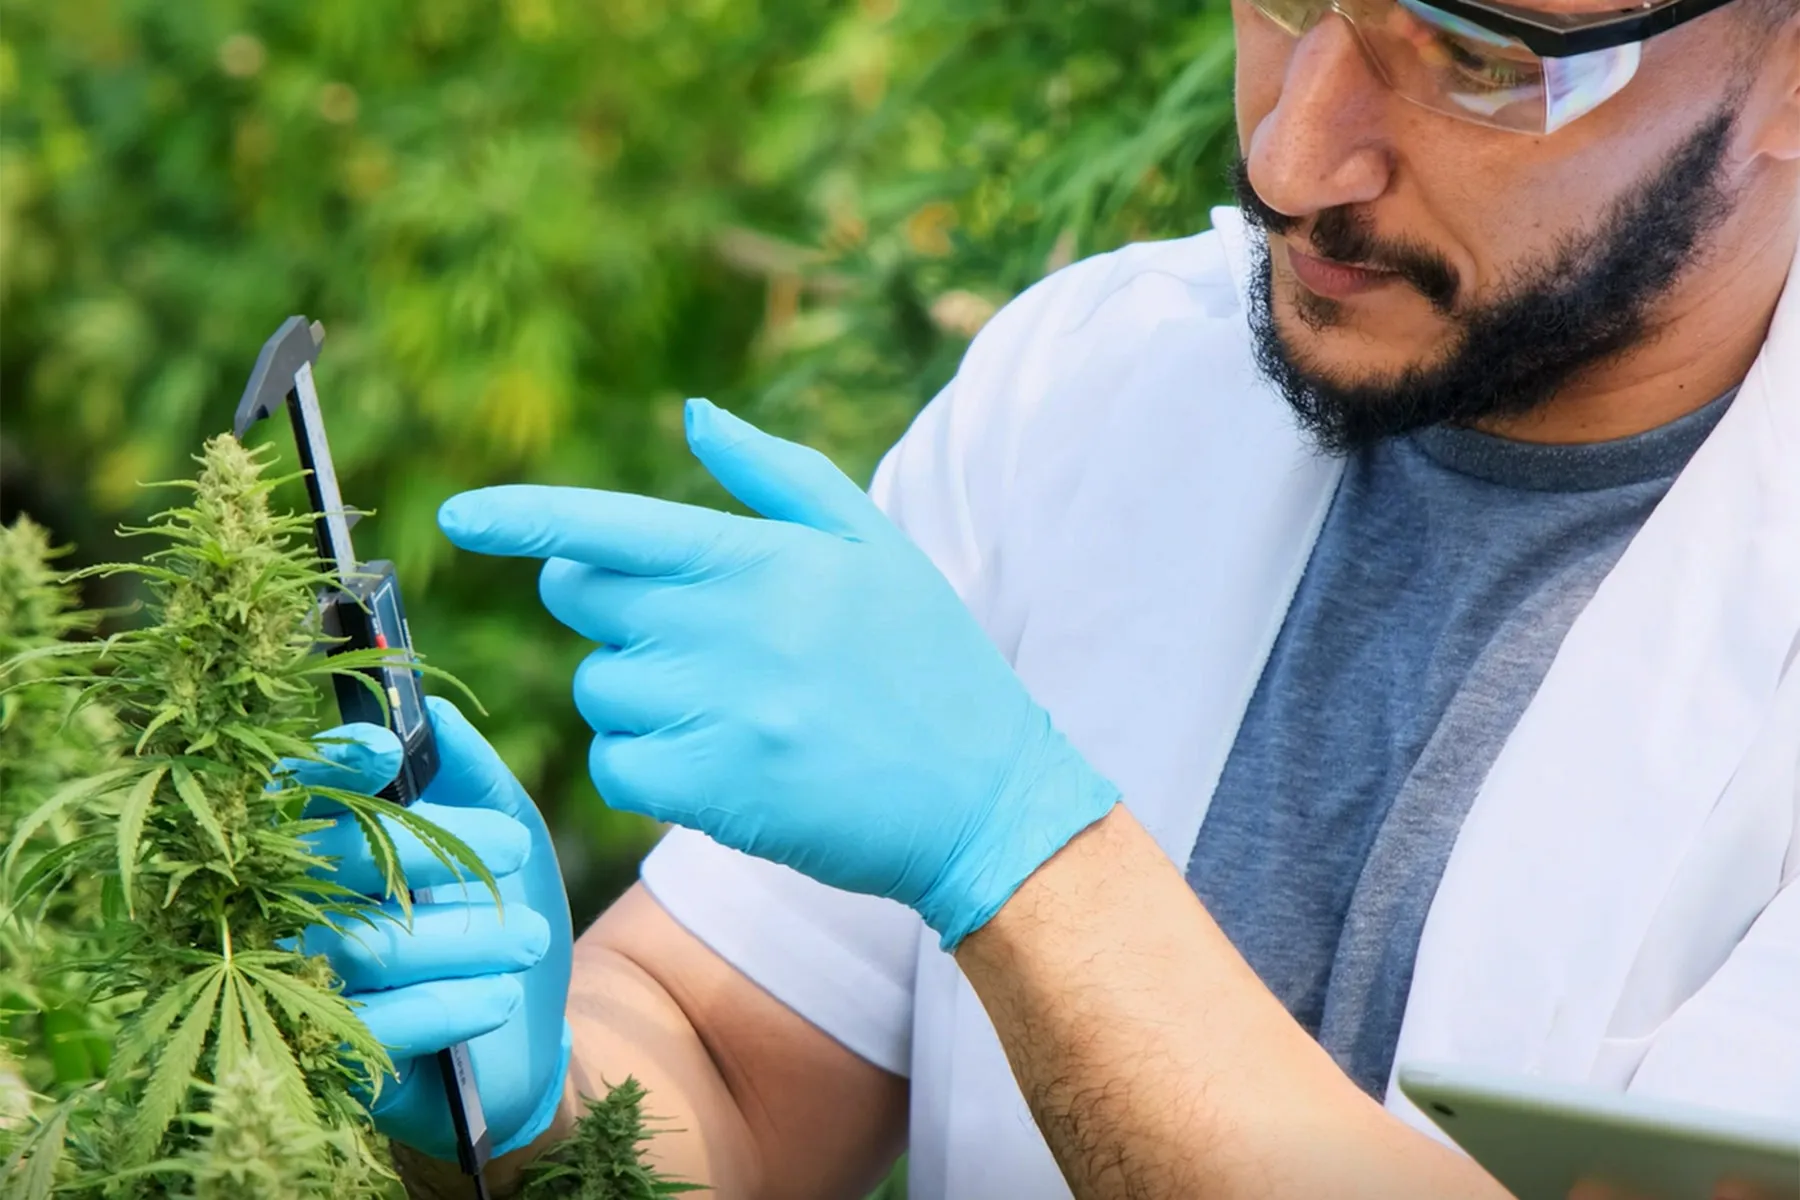 Is This a New Era of Medical Marijuana Breakthroughs?